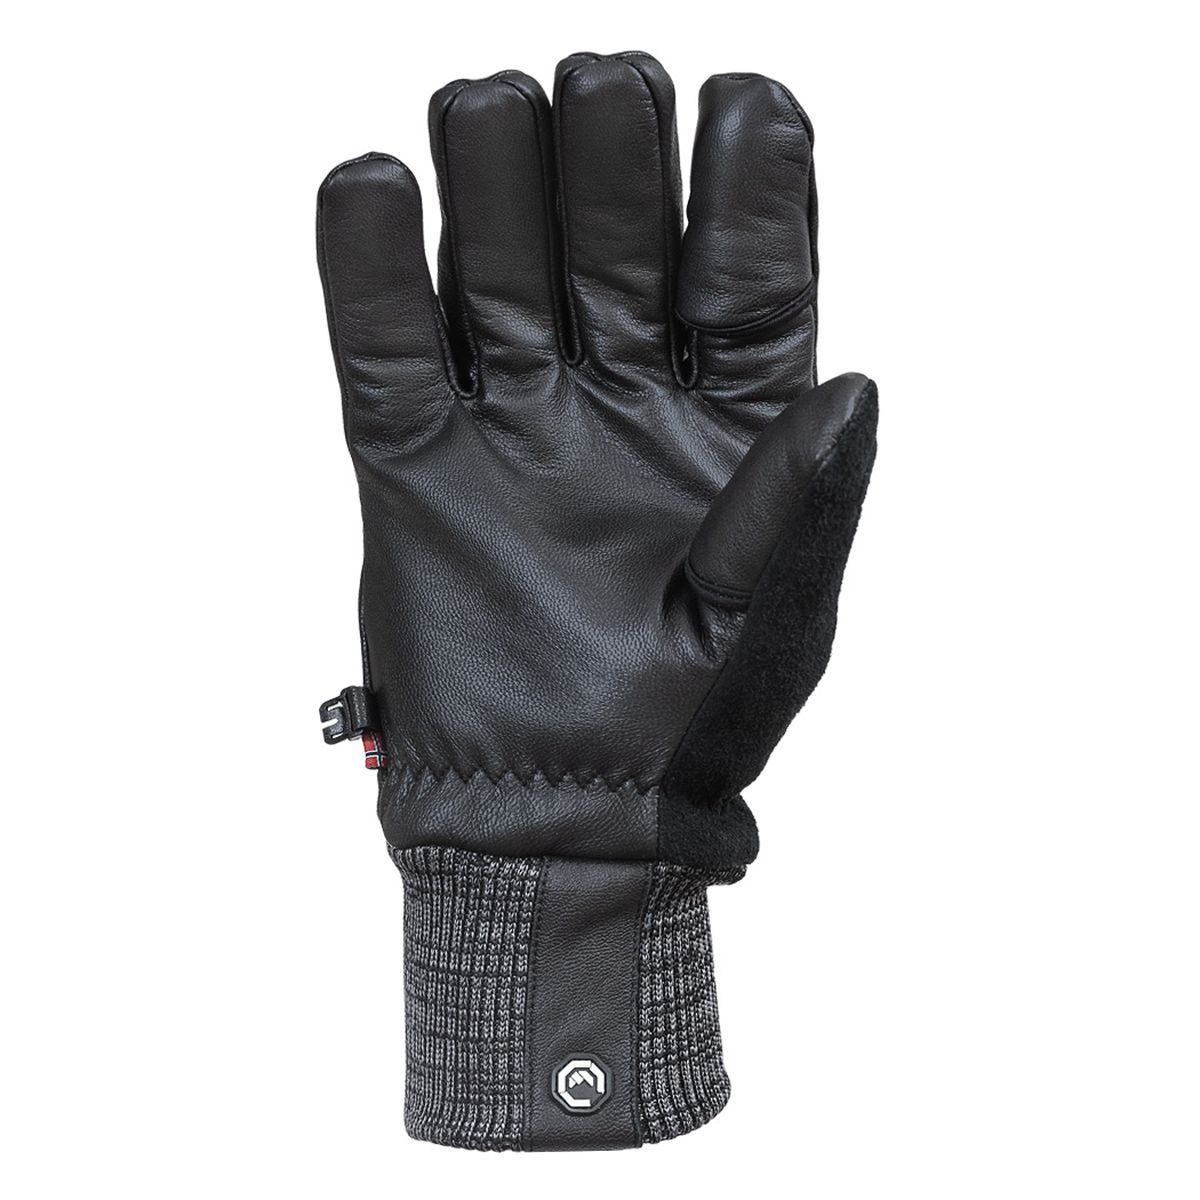 Vallerret Hatchet Leather Glove Black, Leder-Fotohandschuhe XS Schwarz